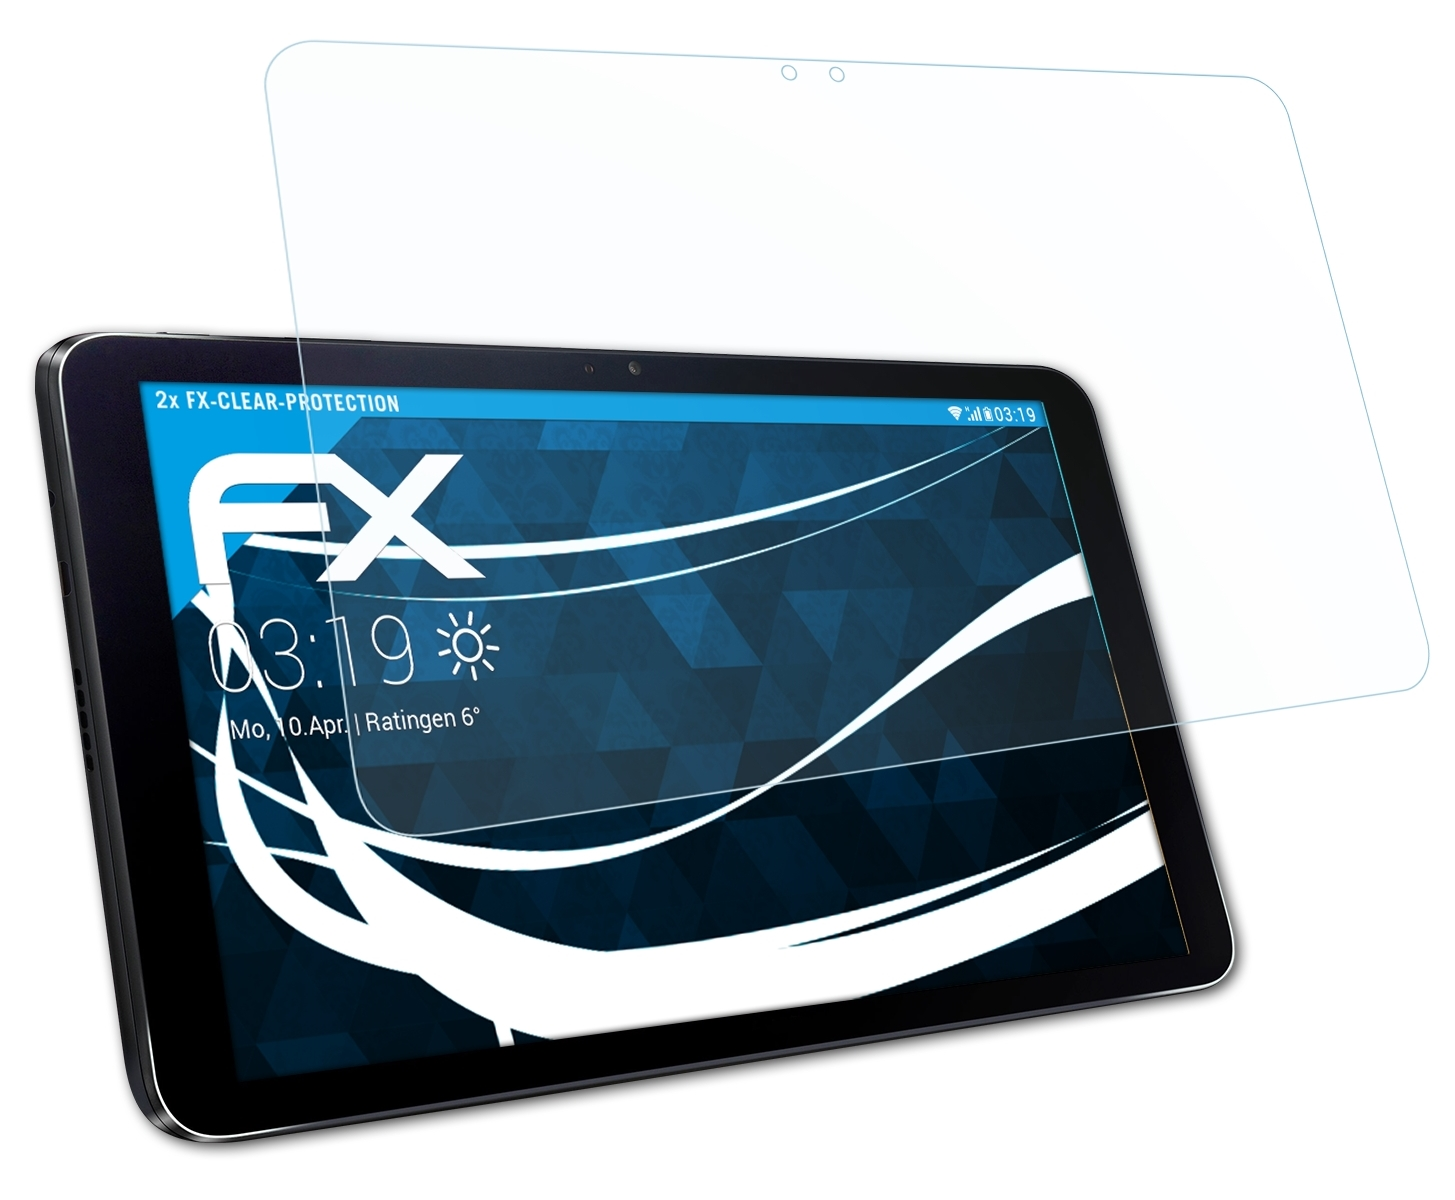 ATFOLIX 2x FX-Clear G Pad 10.1) Displayschutz(für II LG